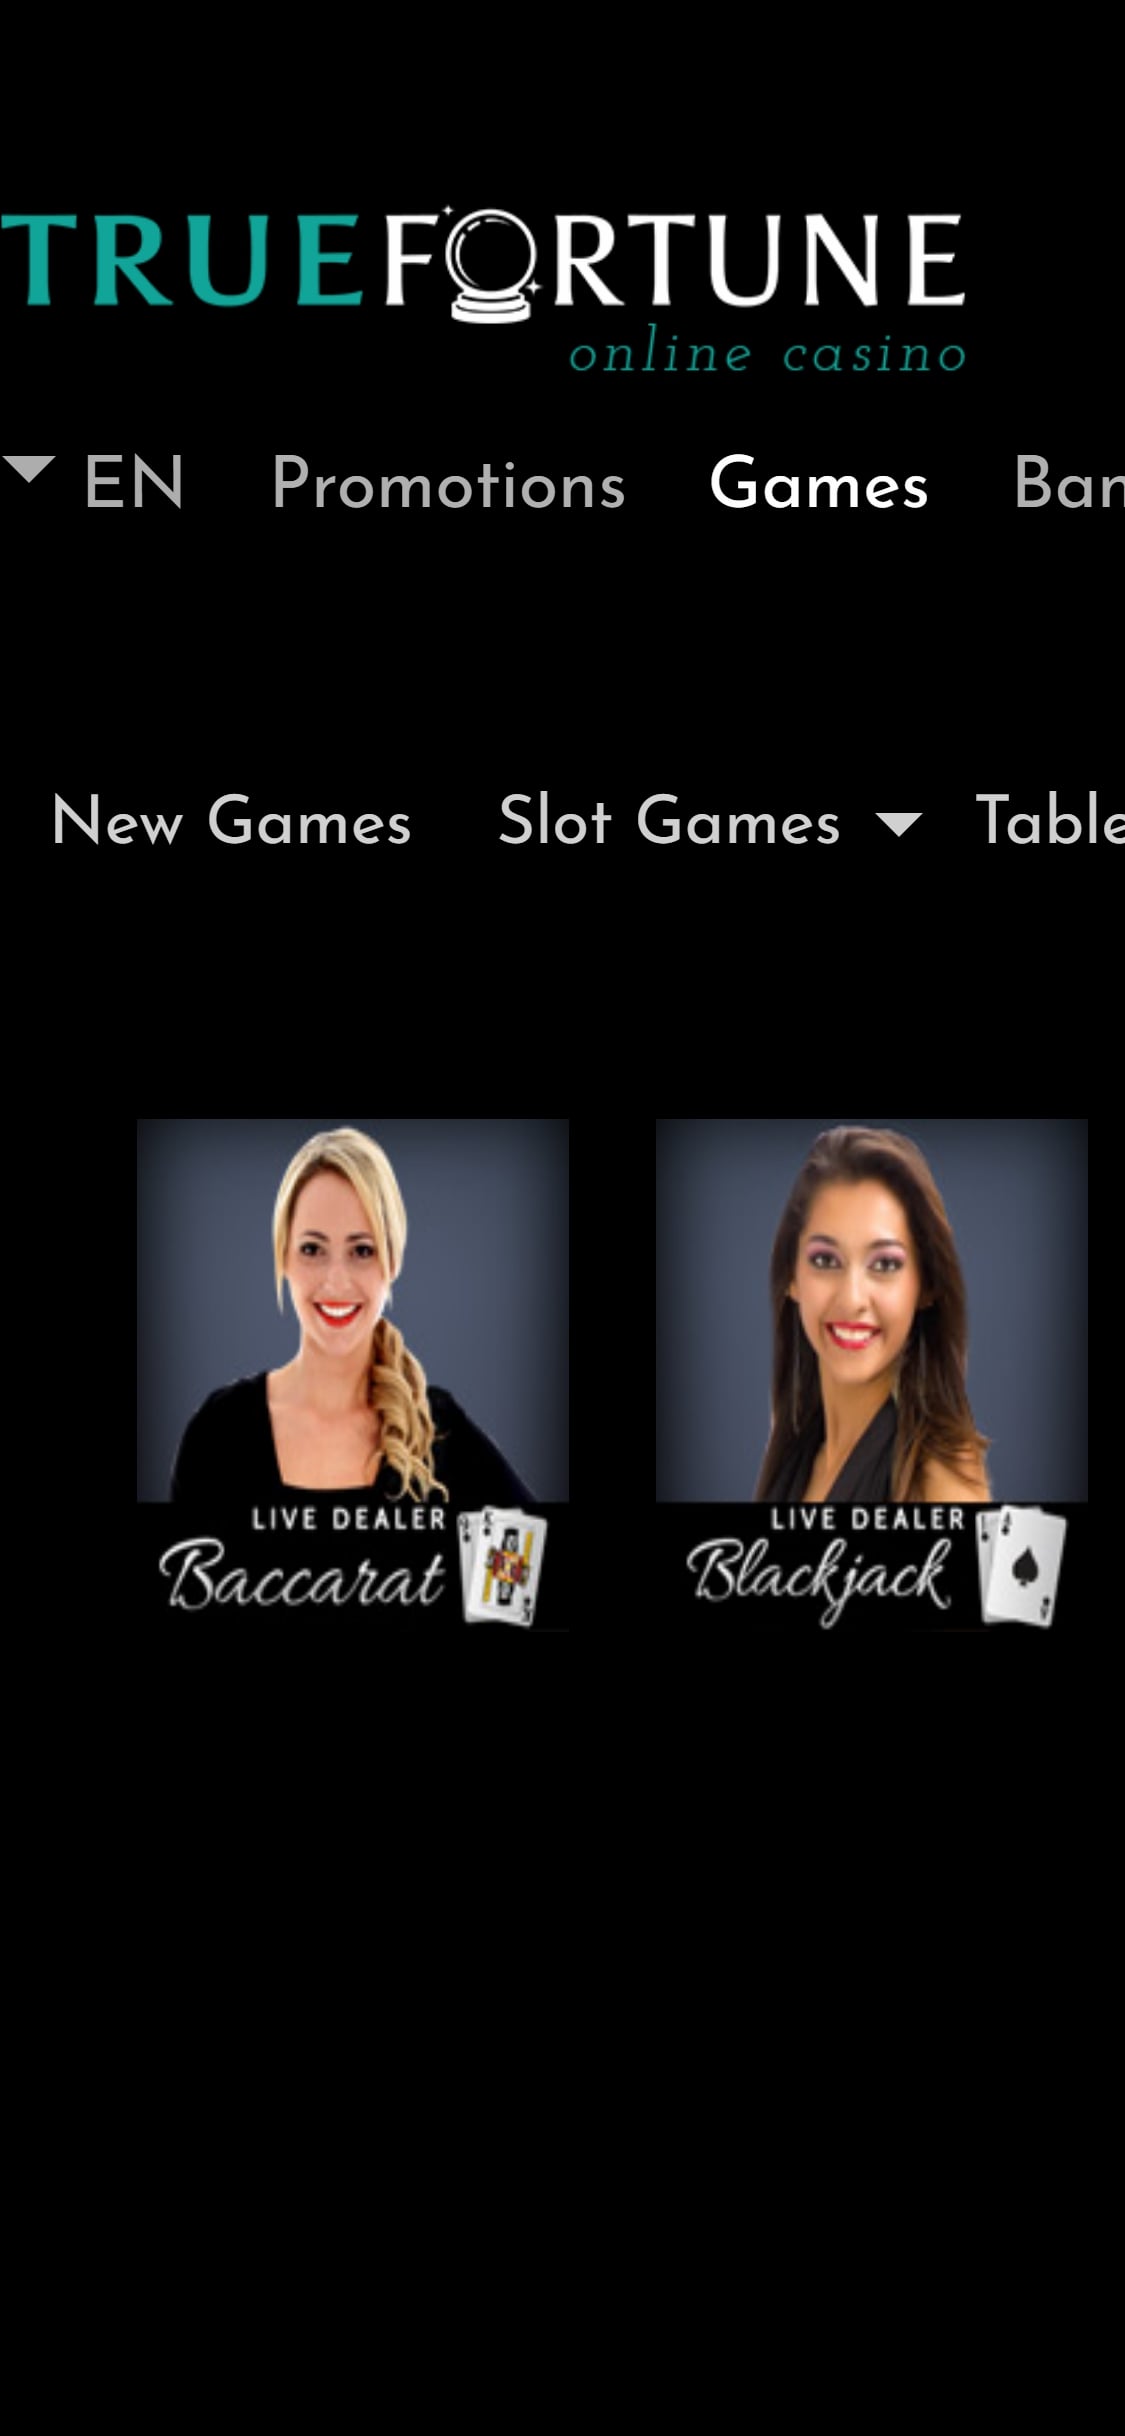 True Fortune Casino Mobile Live Dealer Games Review